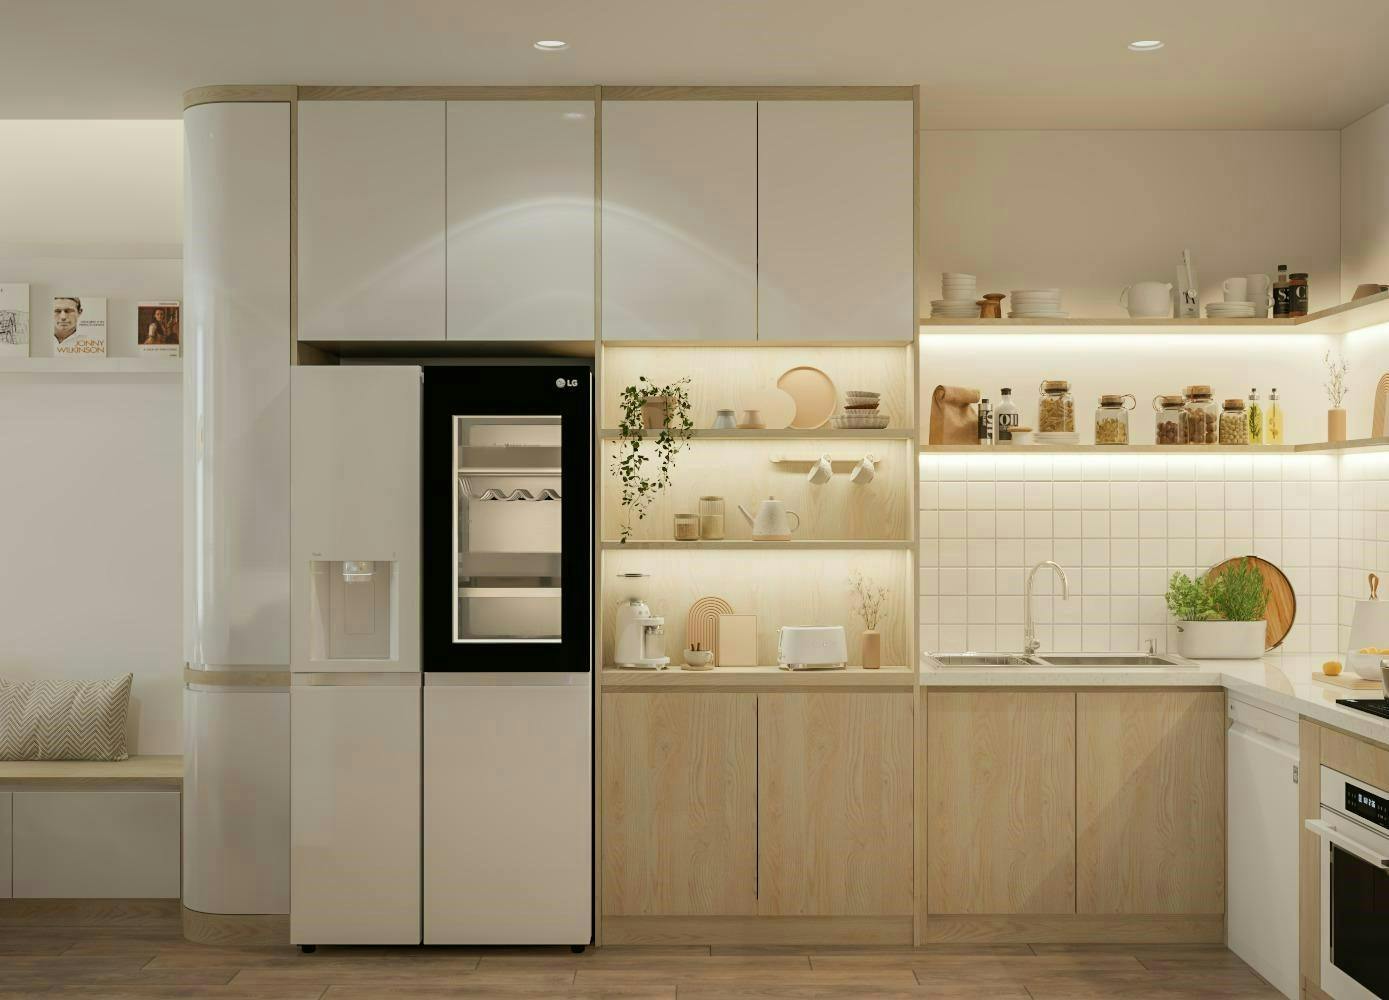 indoors interior design kitchen shelf appliance device electrical device refrigerator cabinet furniture